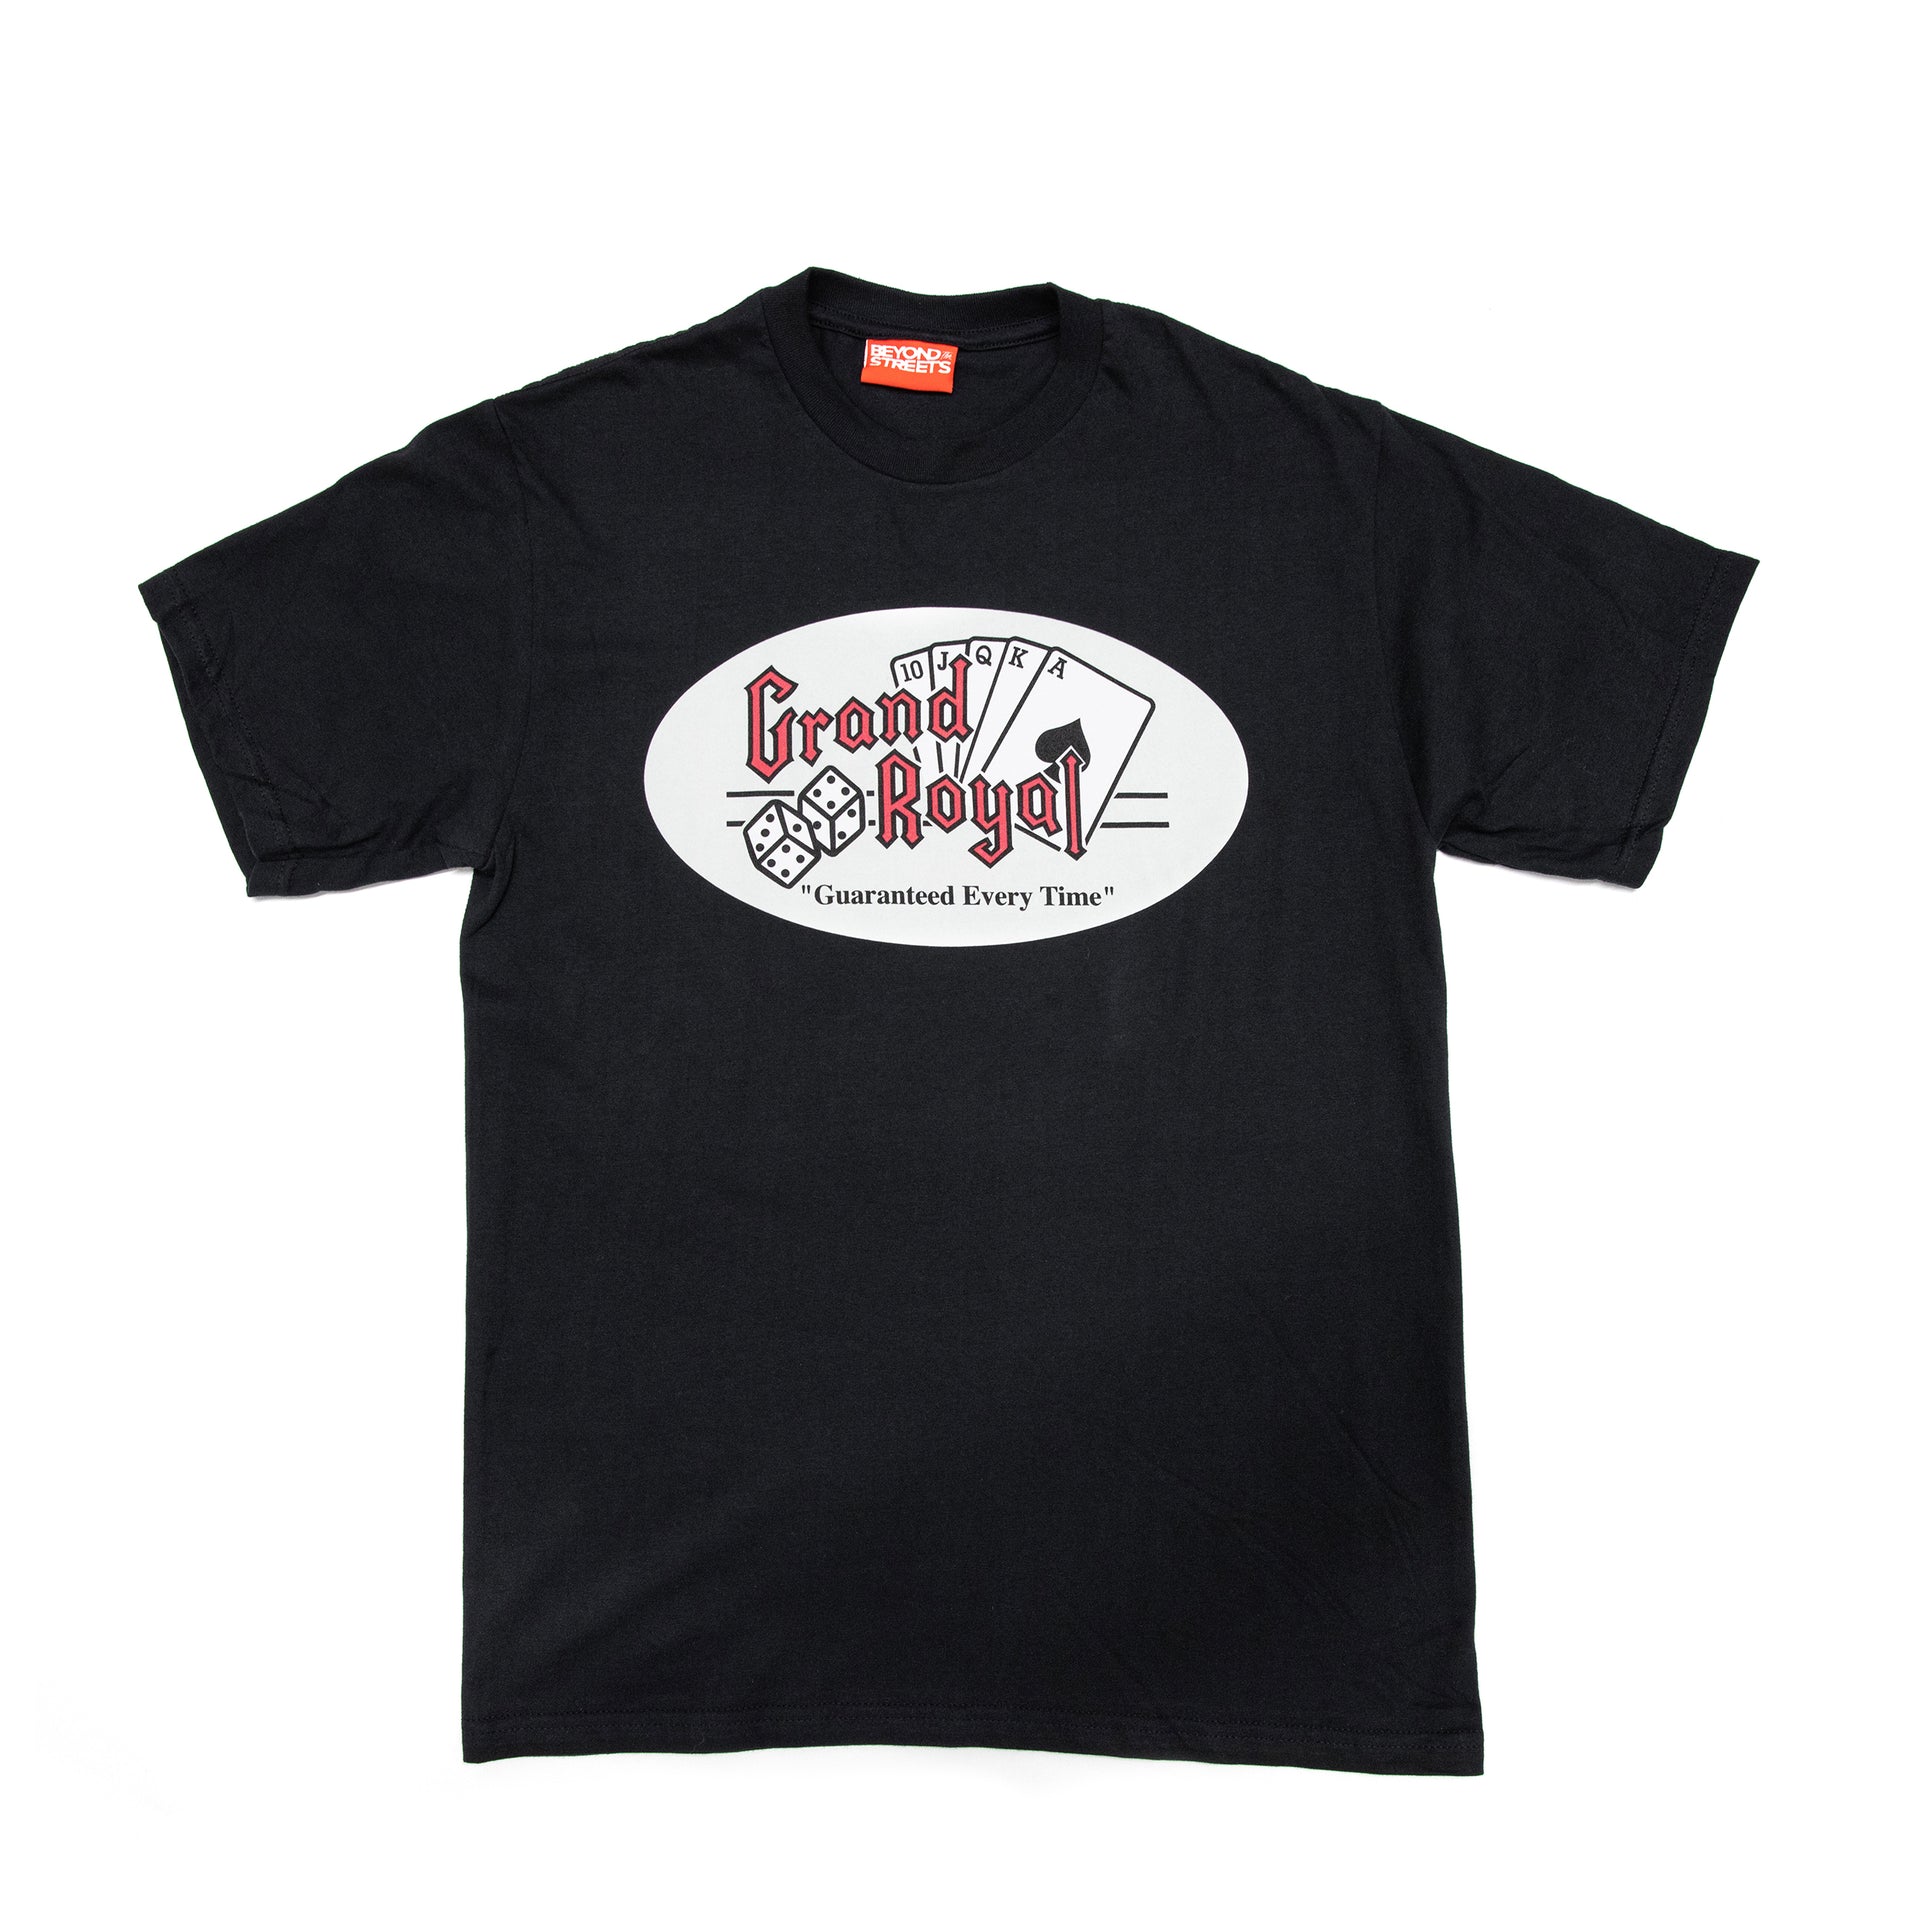 Beastie Boys x BEYOND THE STREETS & Dover Street Market "Grand Royal" Tee